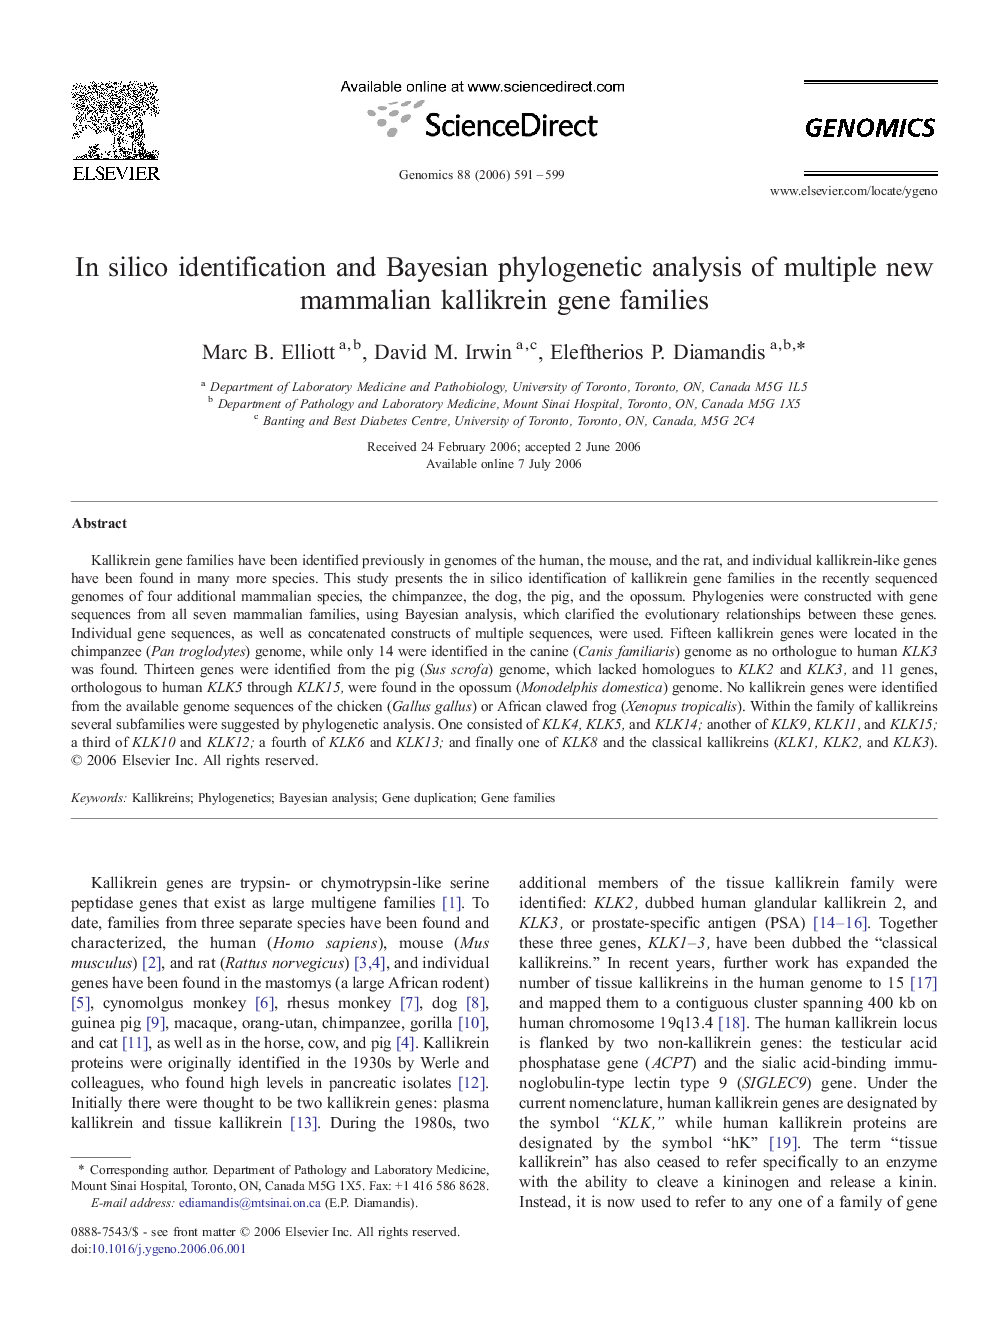 In silico identification and Bayesian phylogenetic analysis of multiple new mammalian kallikrein gene families